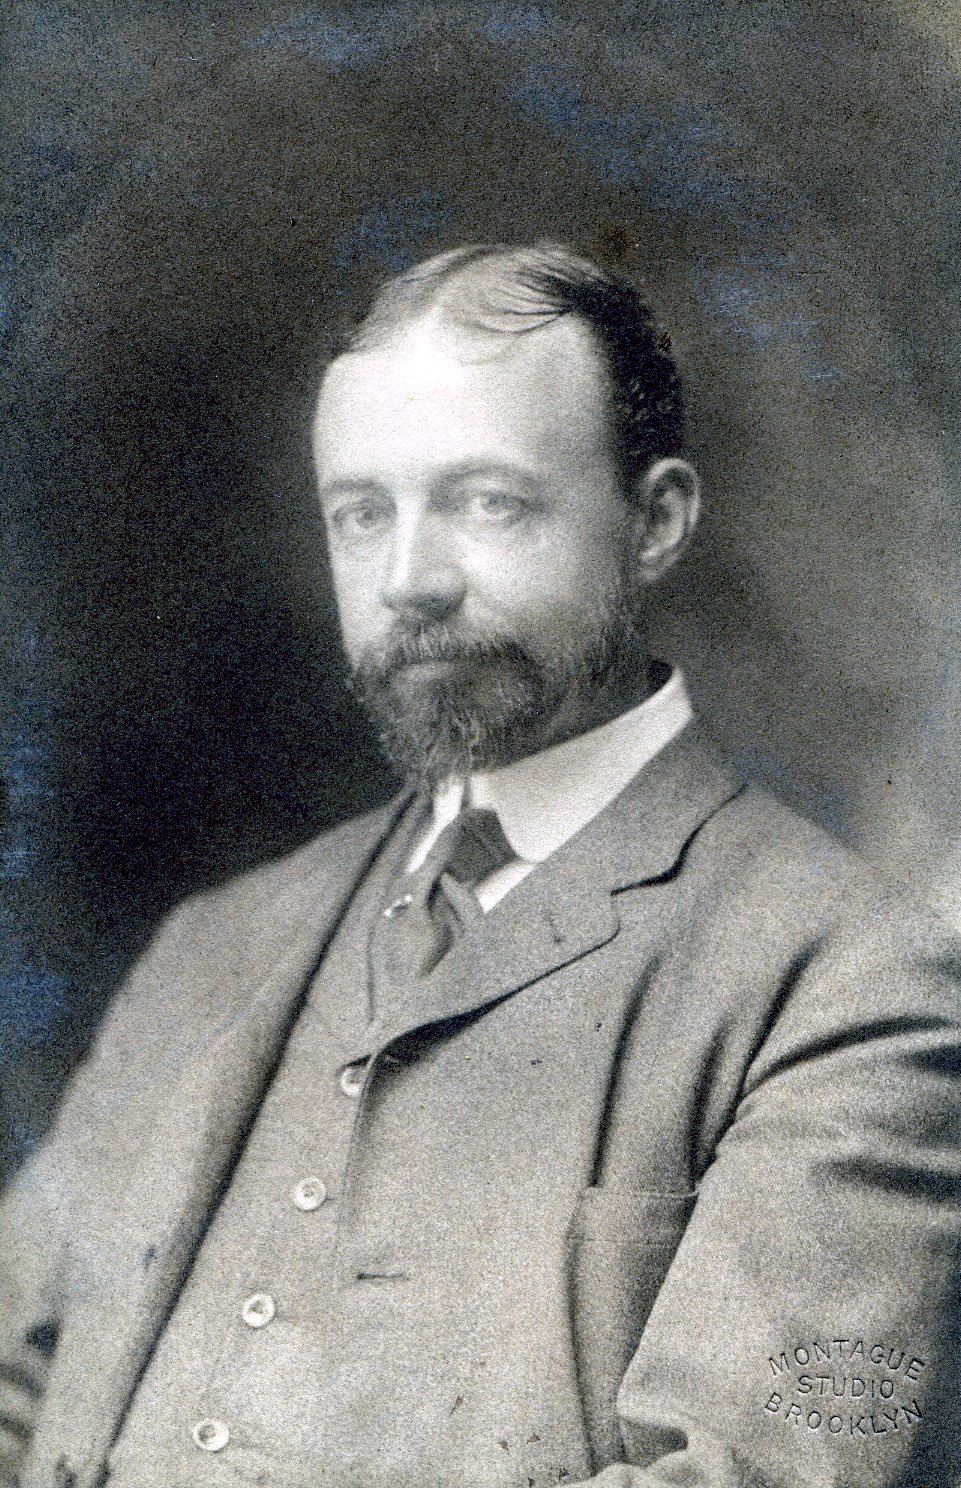 Member portrait of Walter H. Crittenden